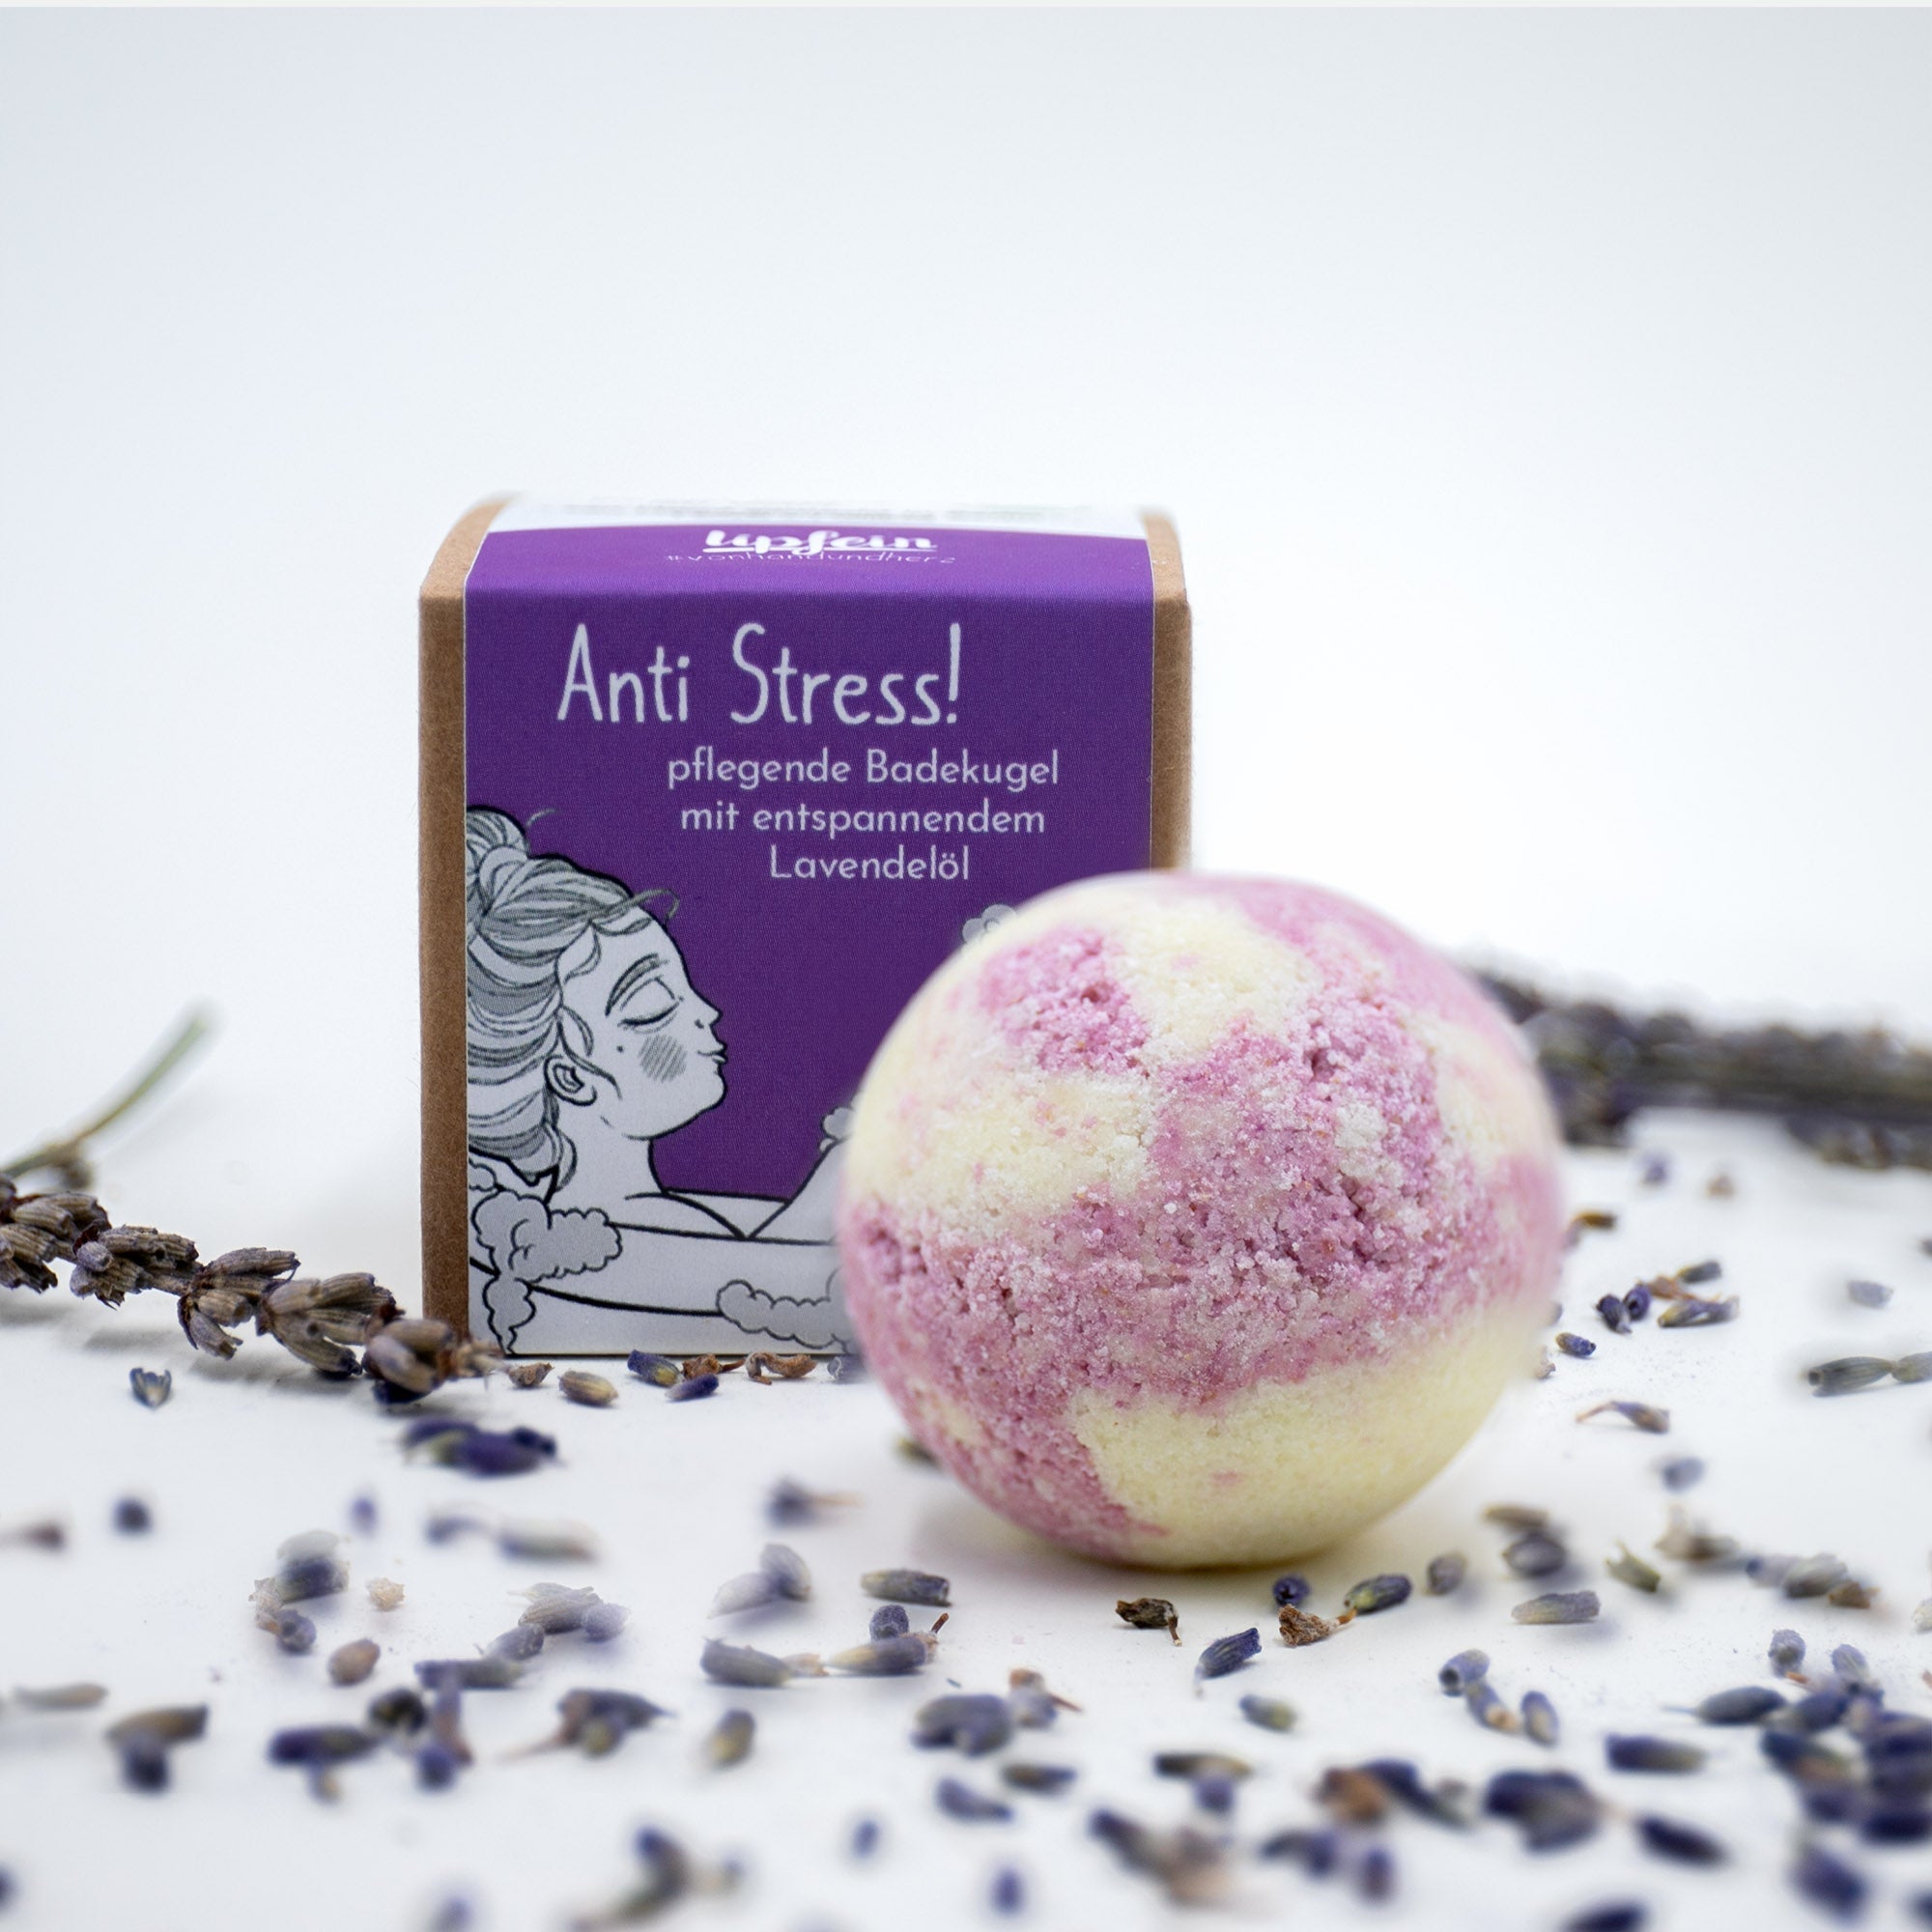 Lipfein Anti Stress! - Pflegende Badekugel Lavendel in Geschenkverpackung